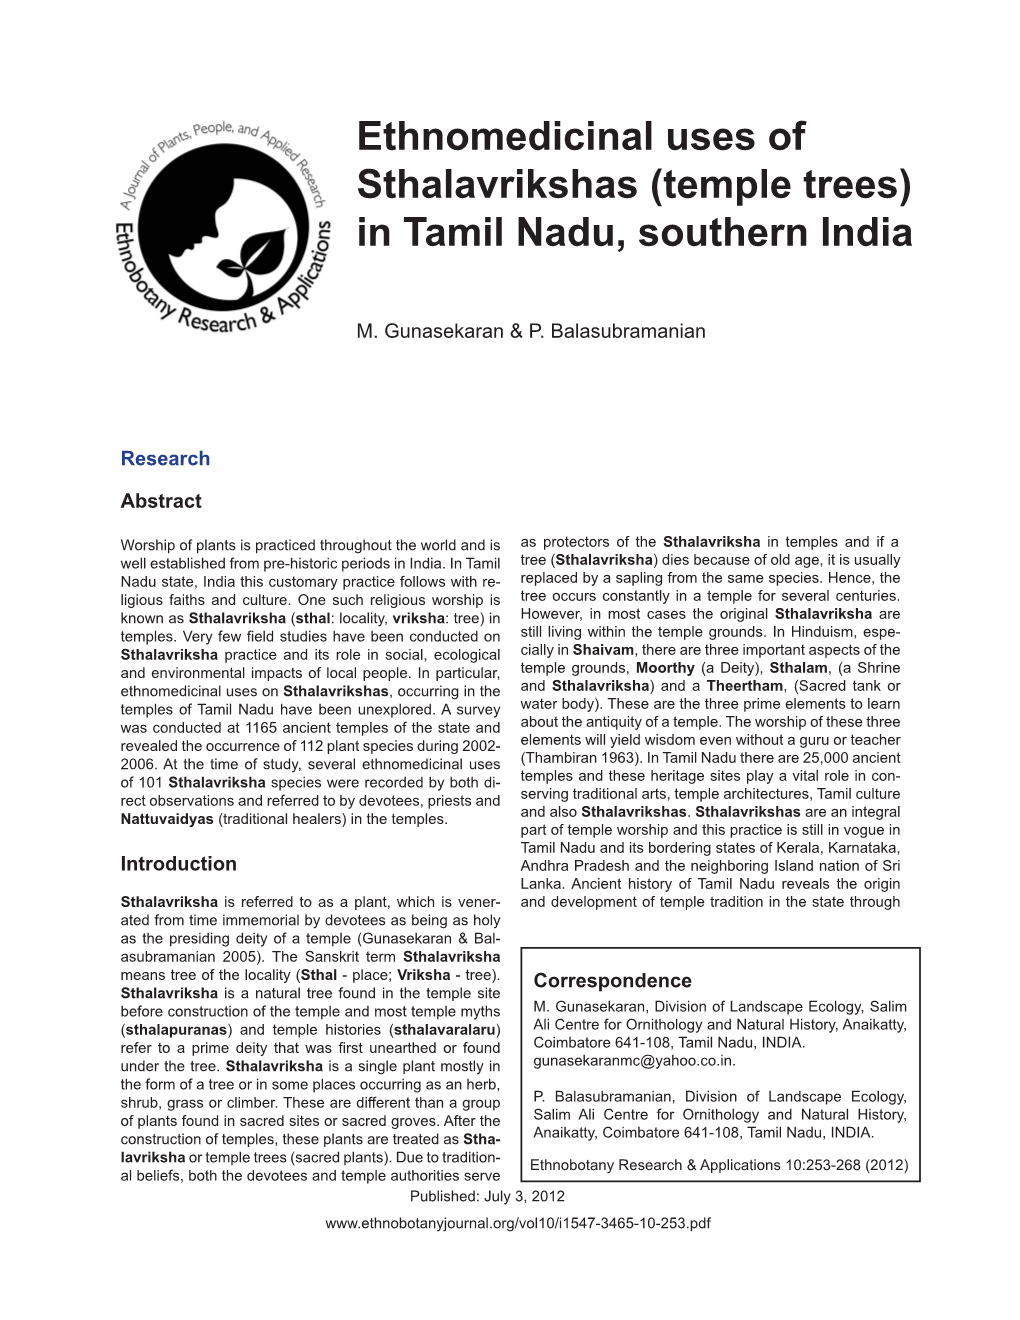 Ethnomedicinal Uses of Sthalavrikshas (Temple Trees) in Tamil Nadu, Southern India